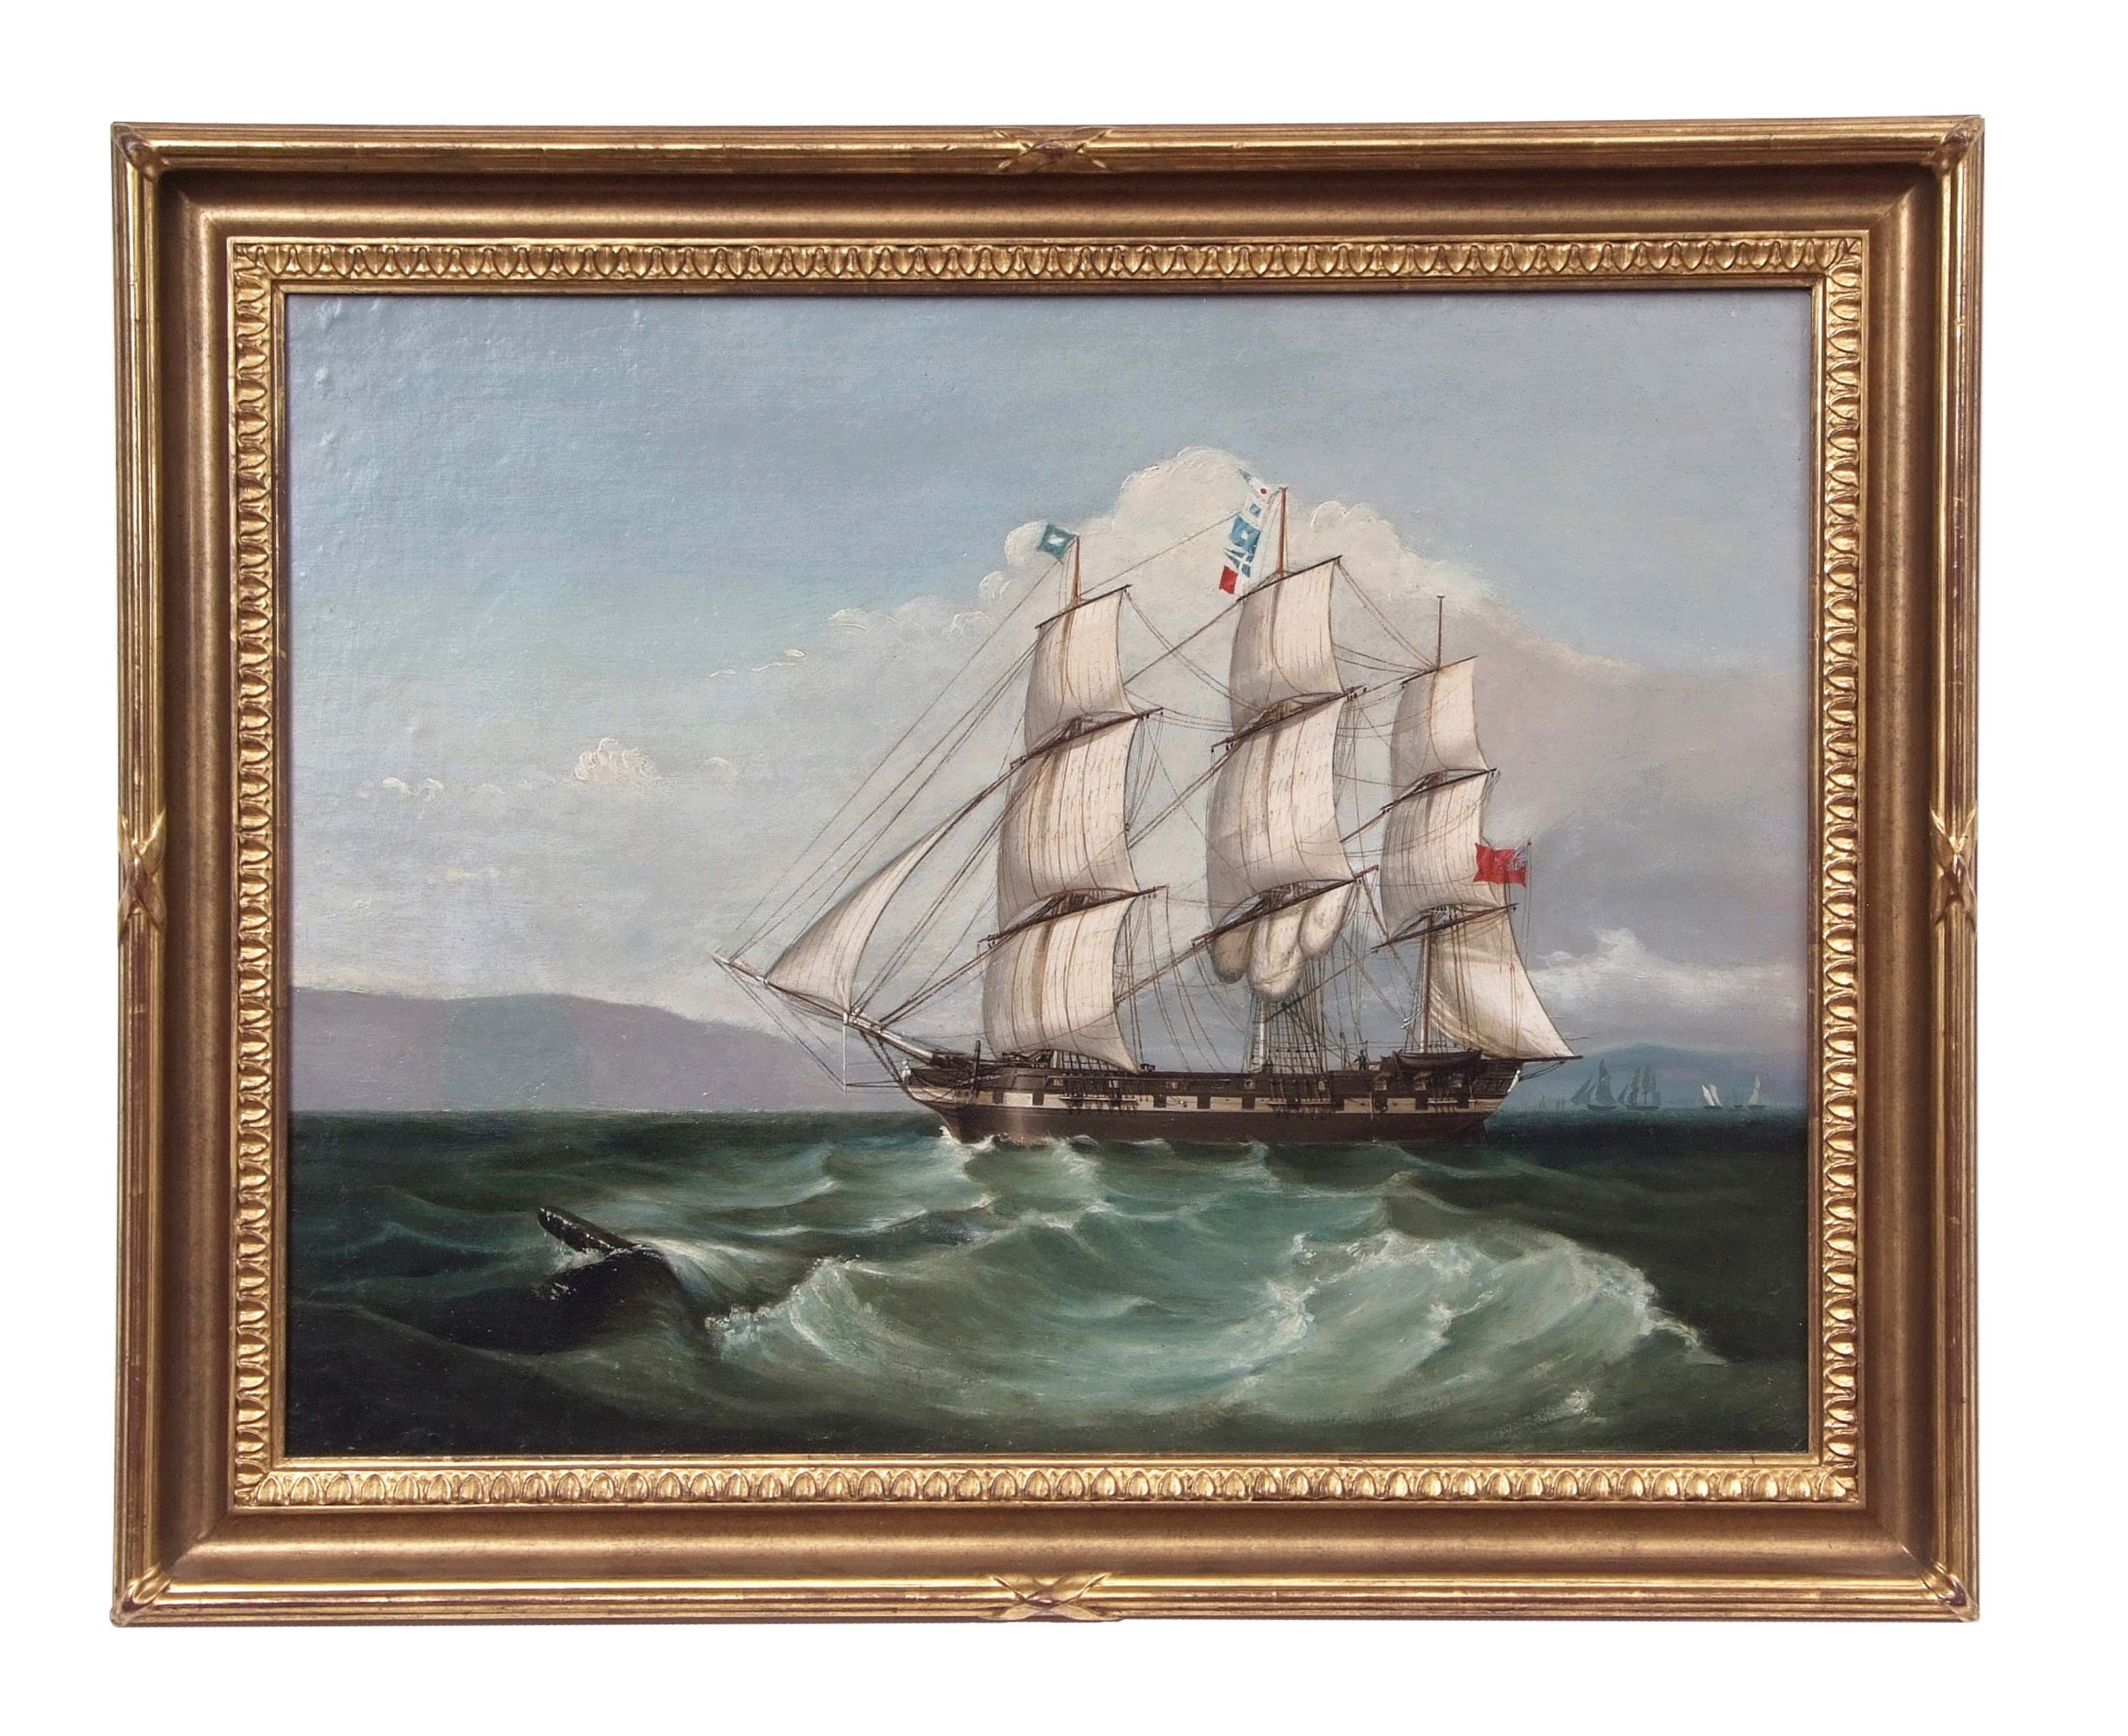 English School (19th century), Royal Navy Ship off a coast, oil on canvas, 49 x 63cm